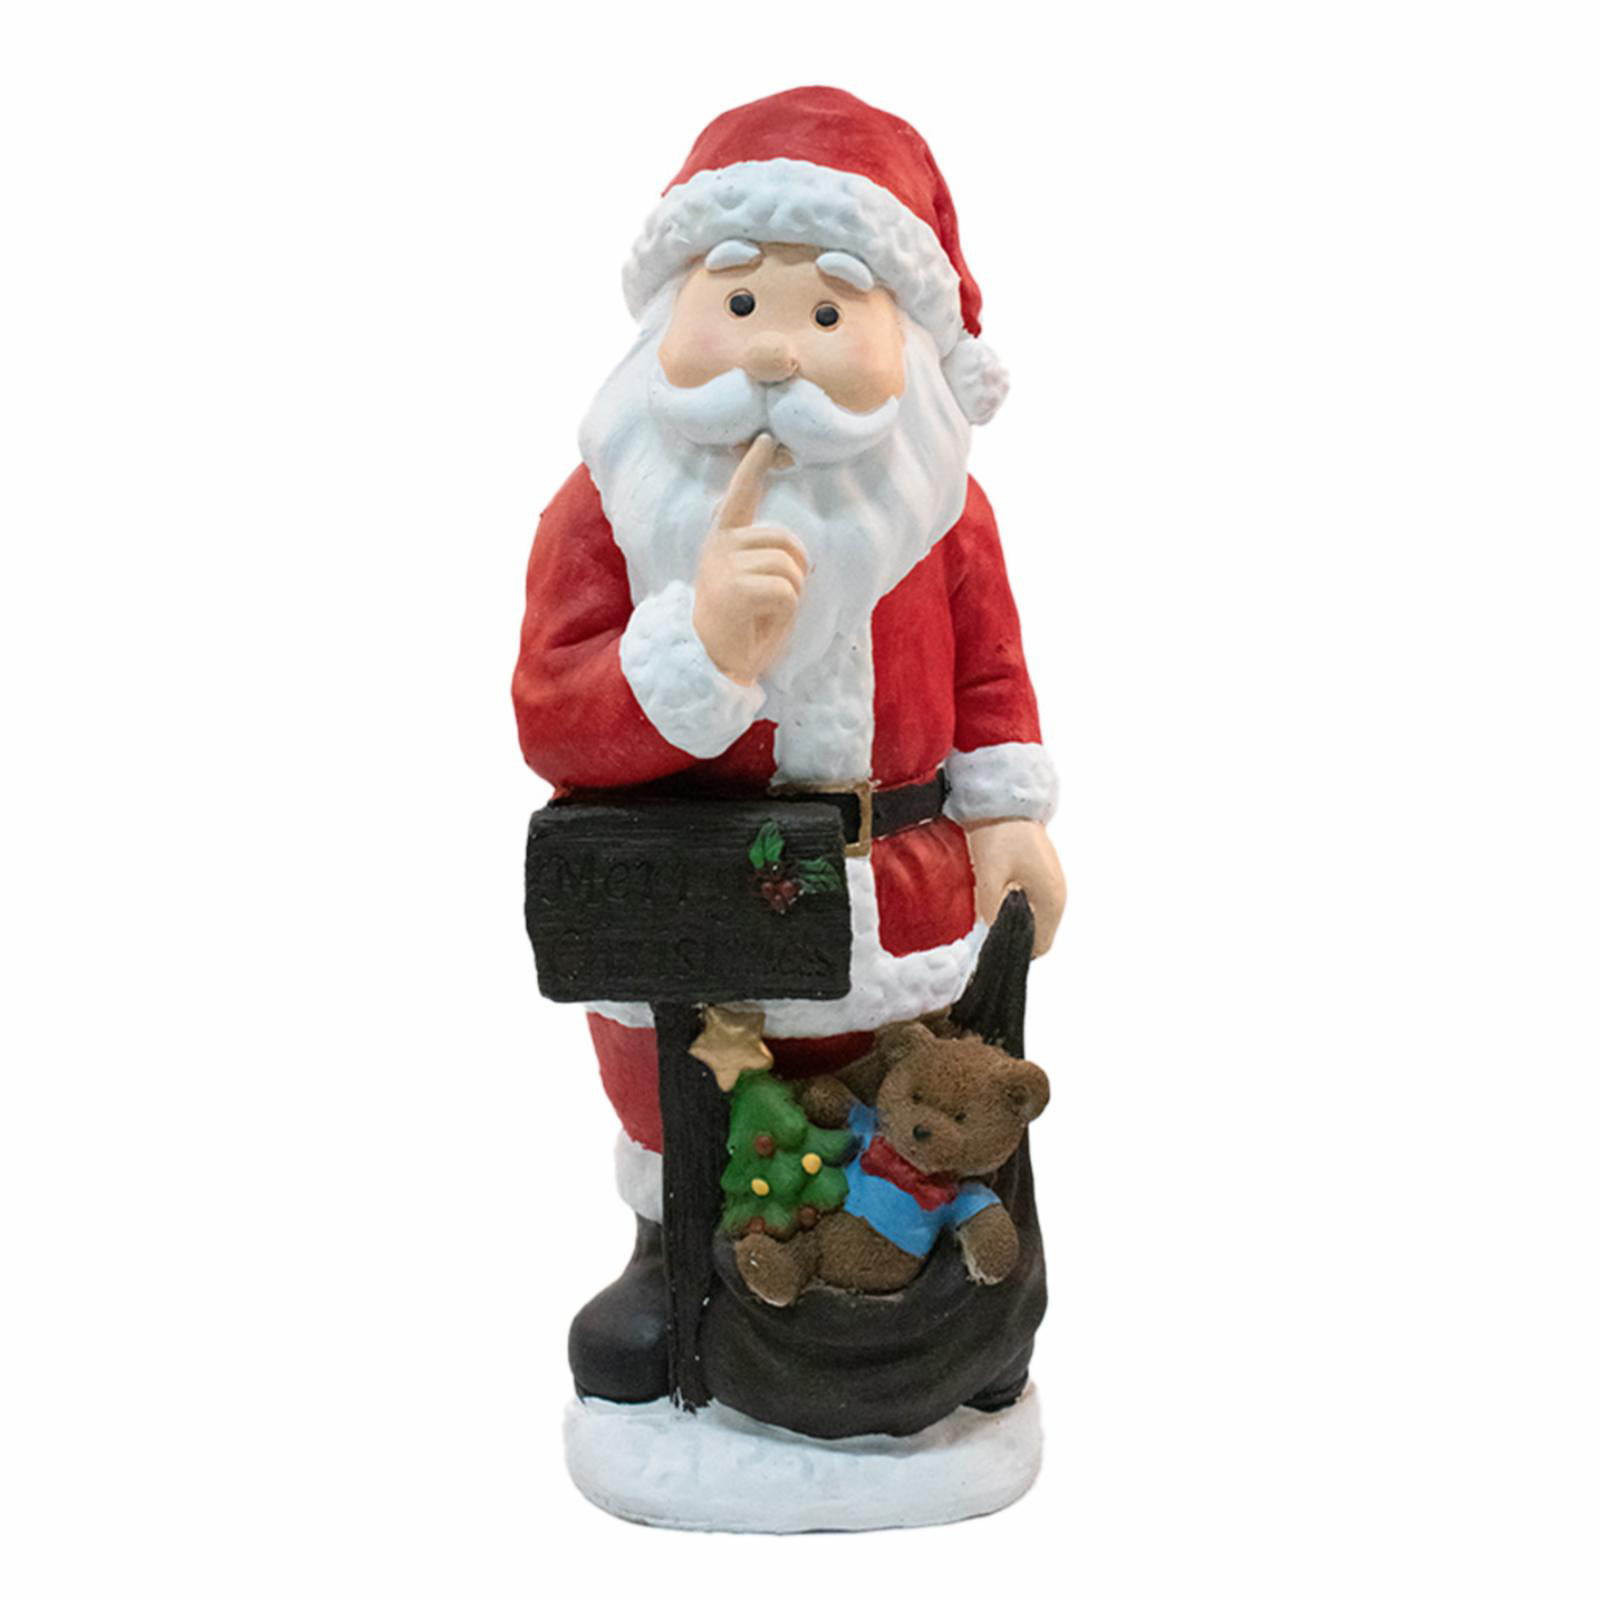 Artilugio 36 in. Santa with Gifts Figurine